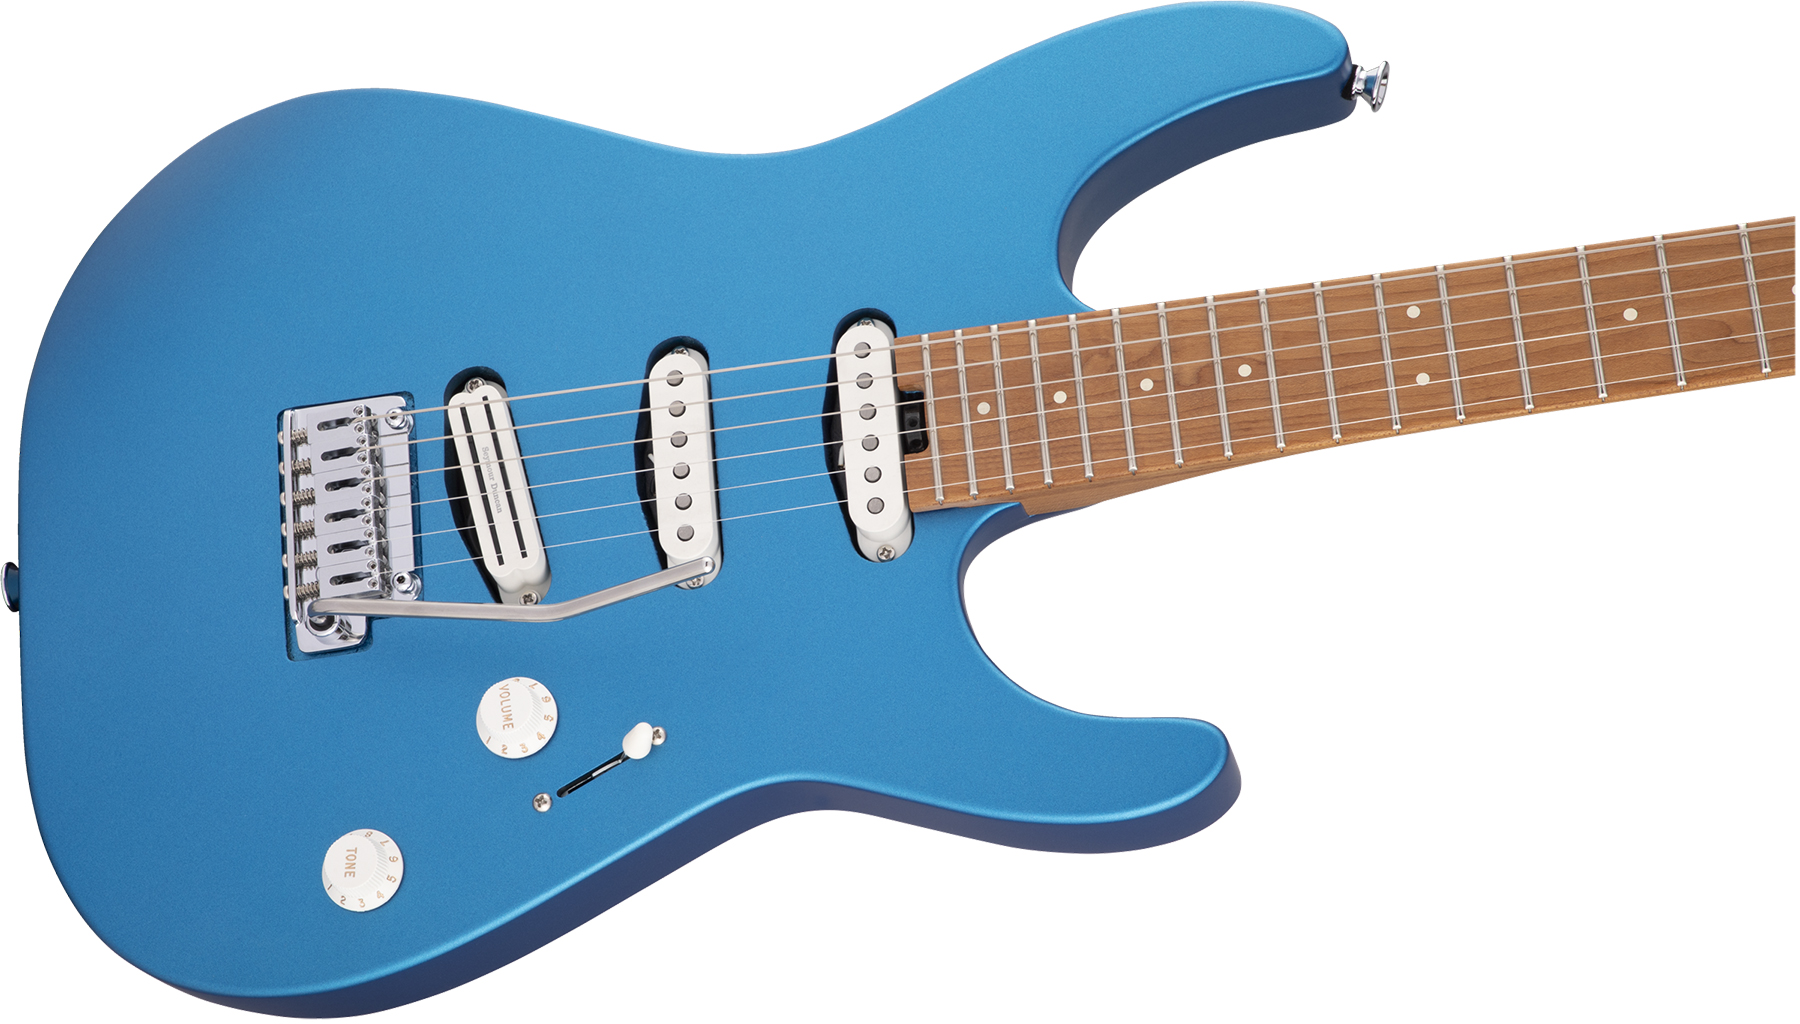 Charvel Dinky Dk22 Sss 2pt Cm Pro-mod 3s Seymour Duncan Mn - Electric Blue - E-Gitarre aus Metall - Variation 2